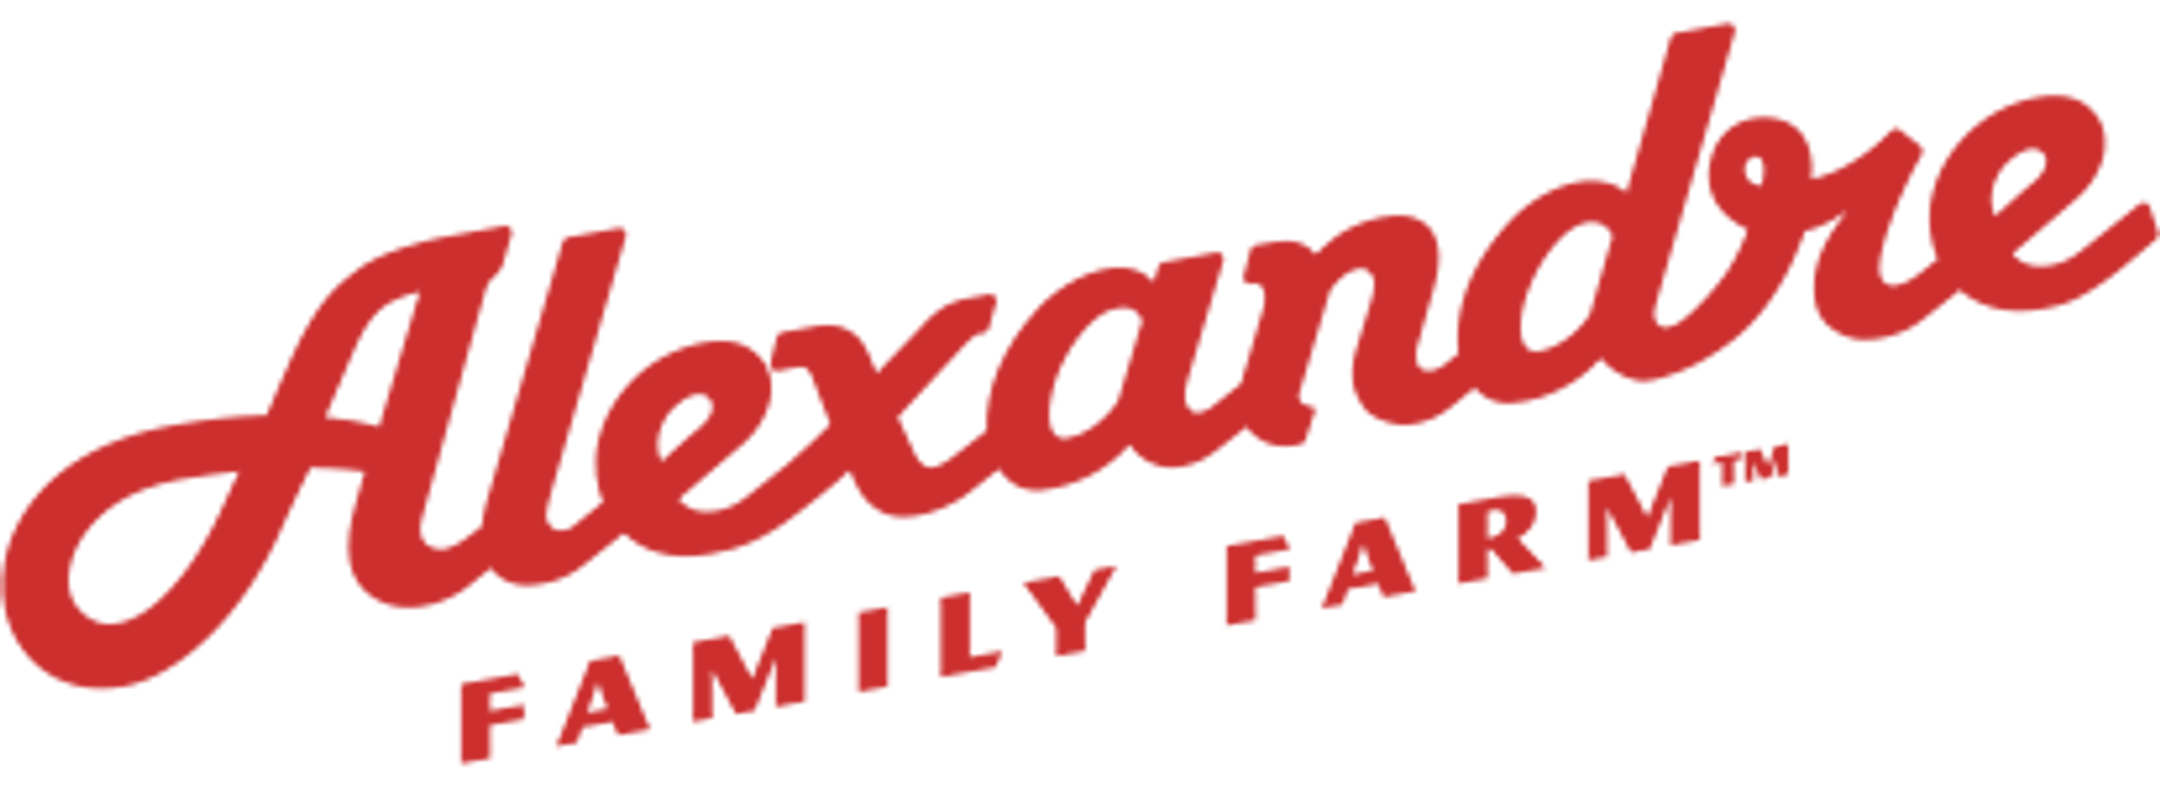 Alexandre Family Farm logo